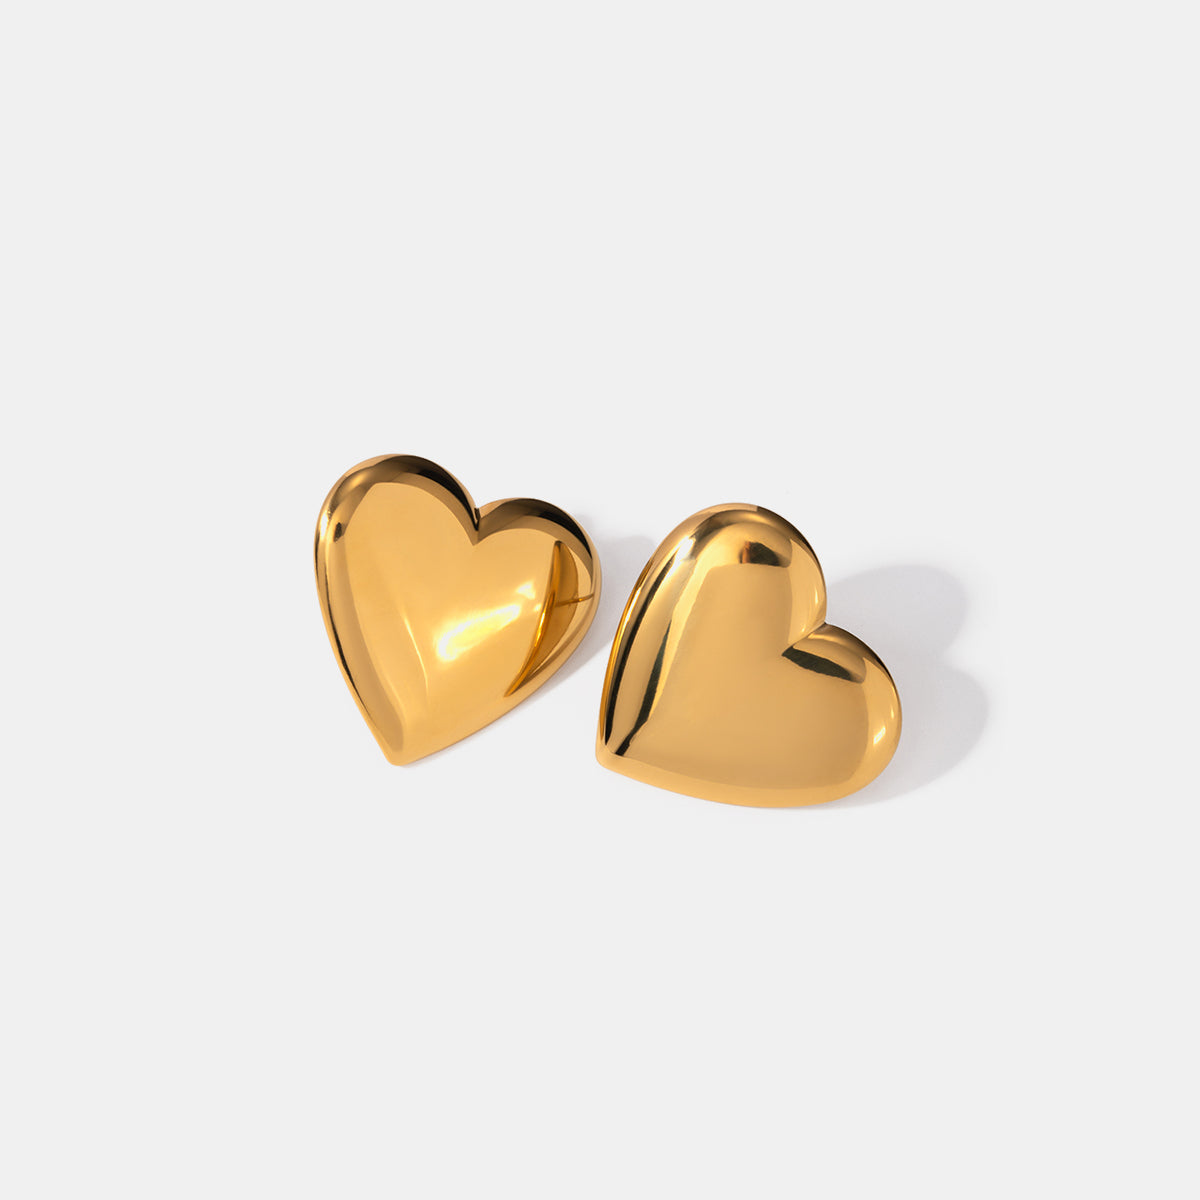 Stainless Steel Heart Stud Earrings Gold One Size 